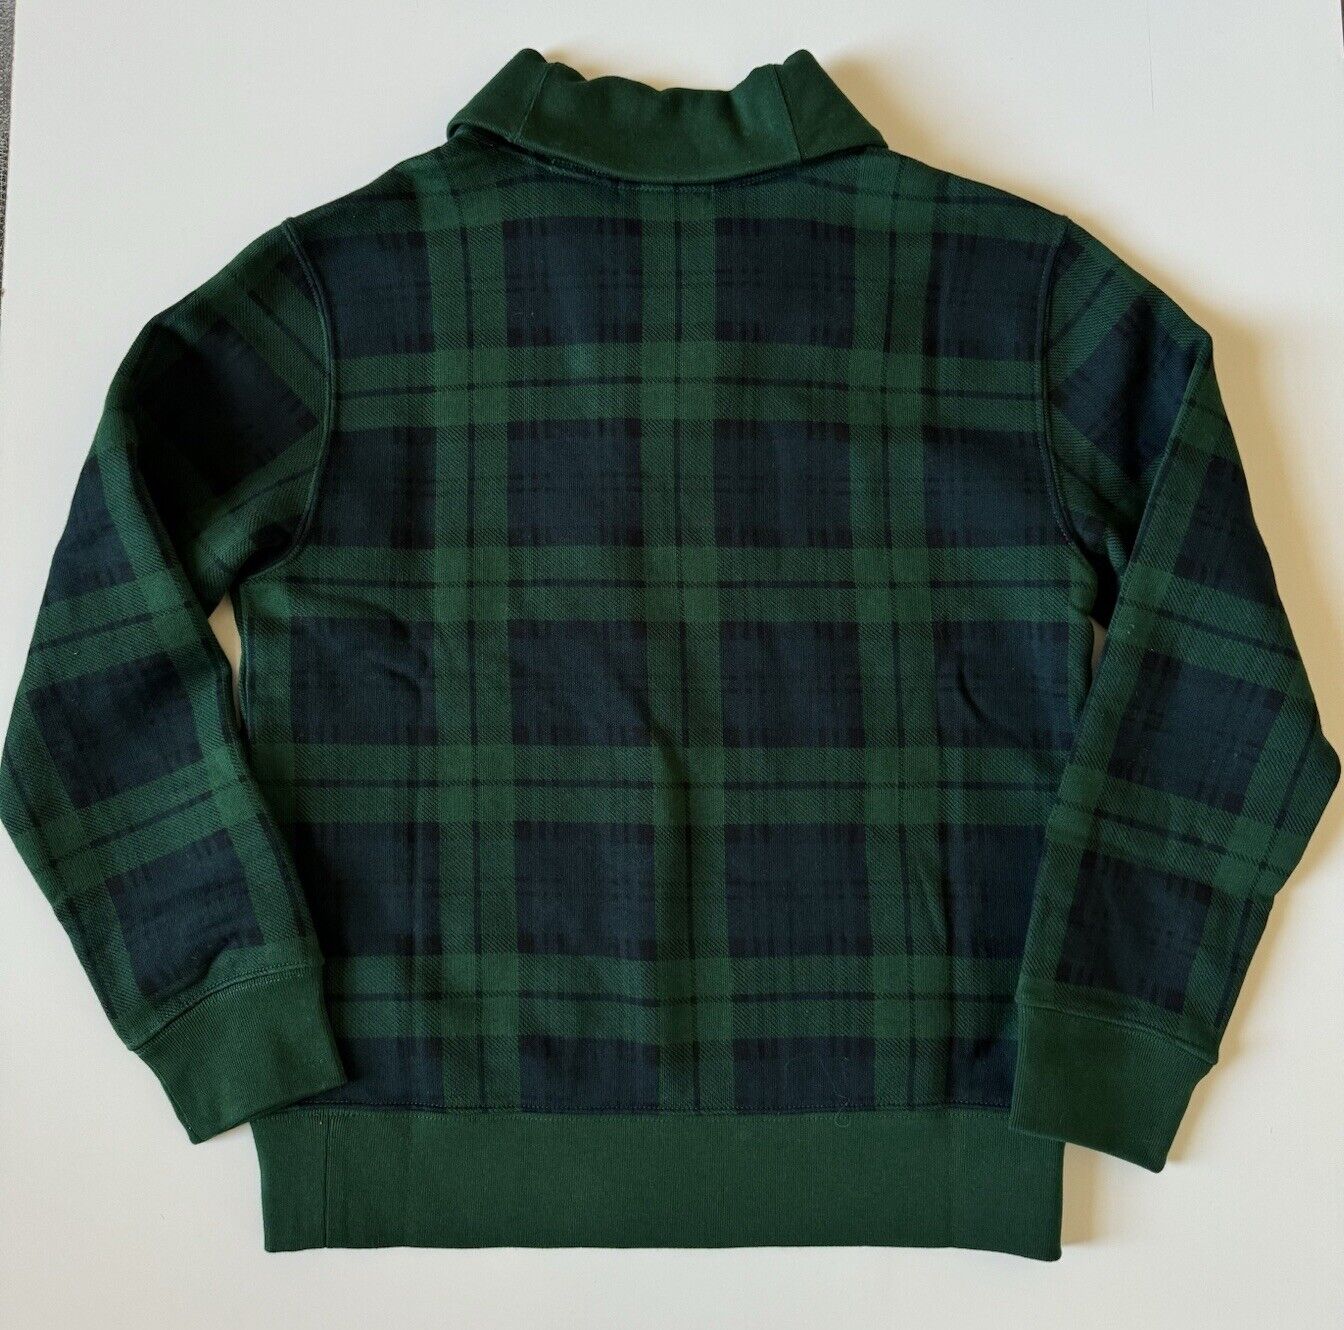 NWT Polo Ralph Lauren Boys Green/Black Cotton Sweater Size M (10-12)